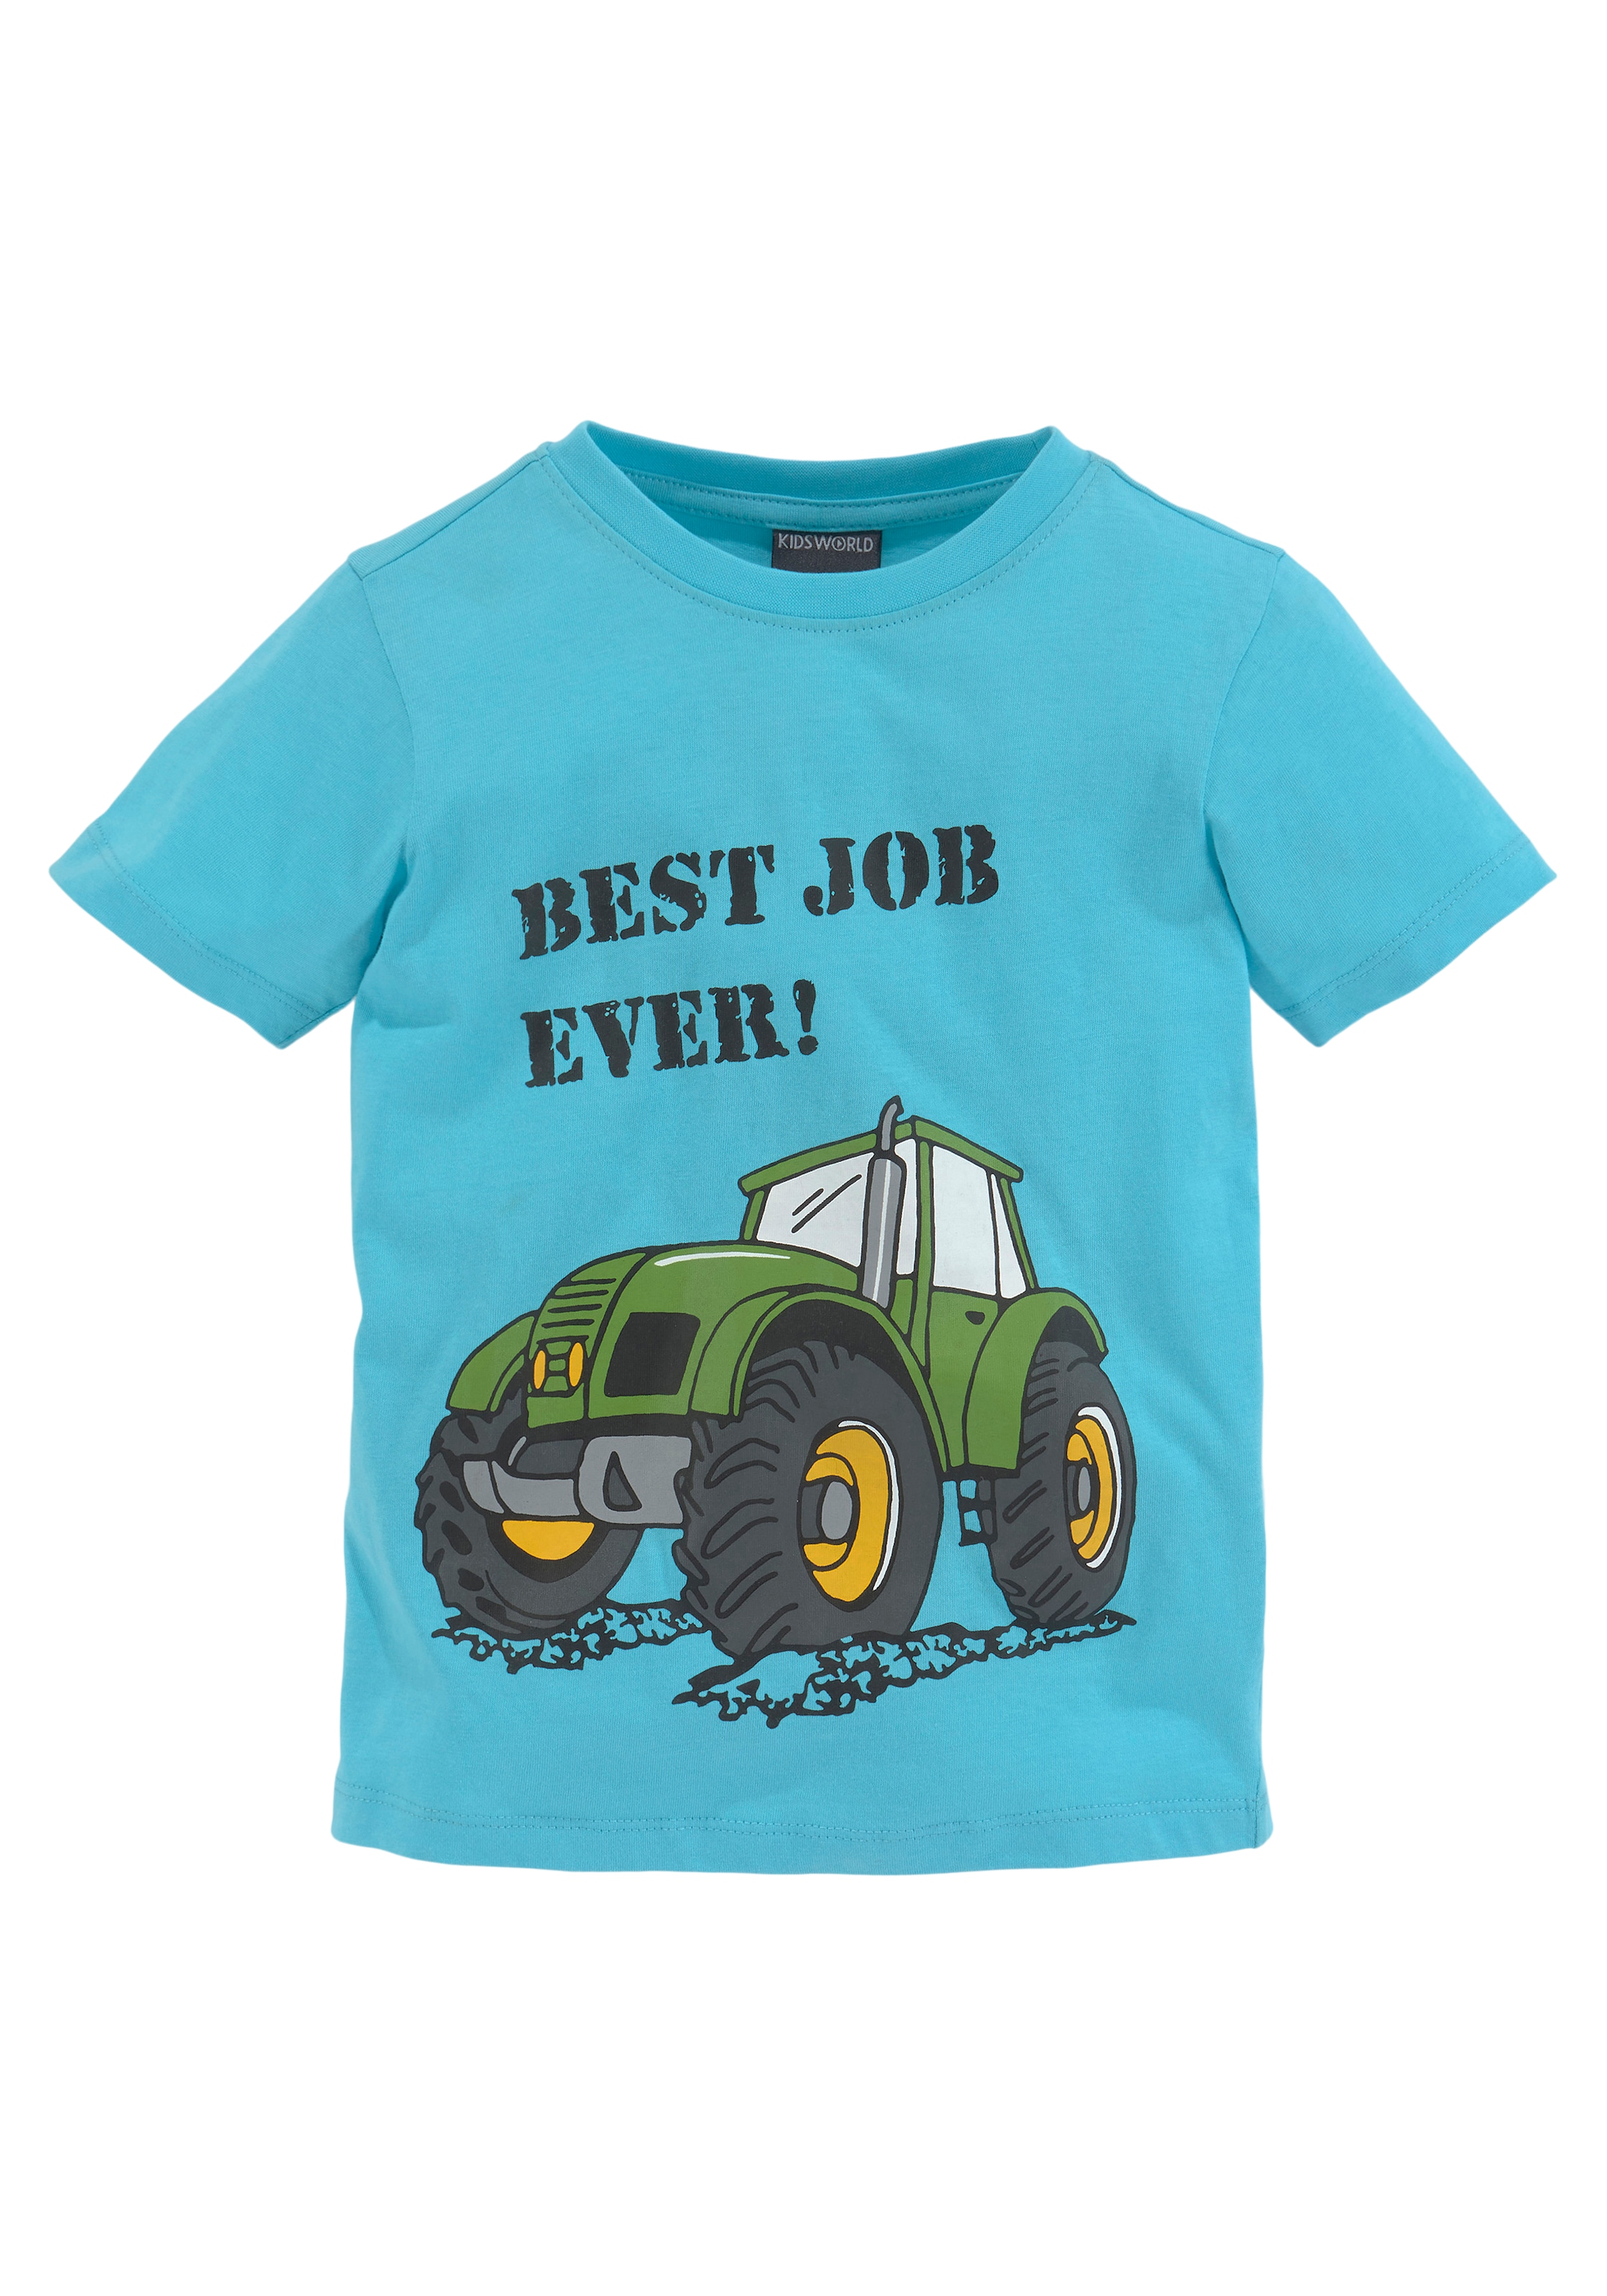 bestellen | »BEST BAUR 2er-Pack) EVER!«, T-Shirt KIDSWORLD (Packung, JOB